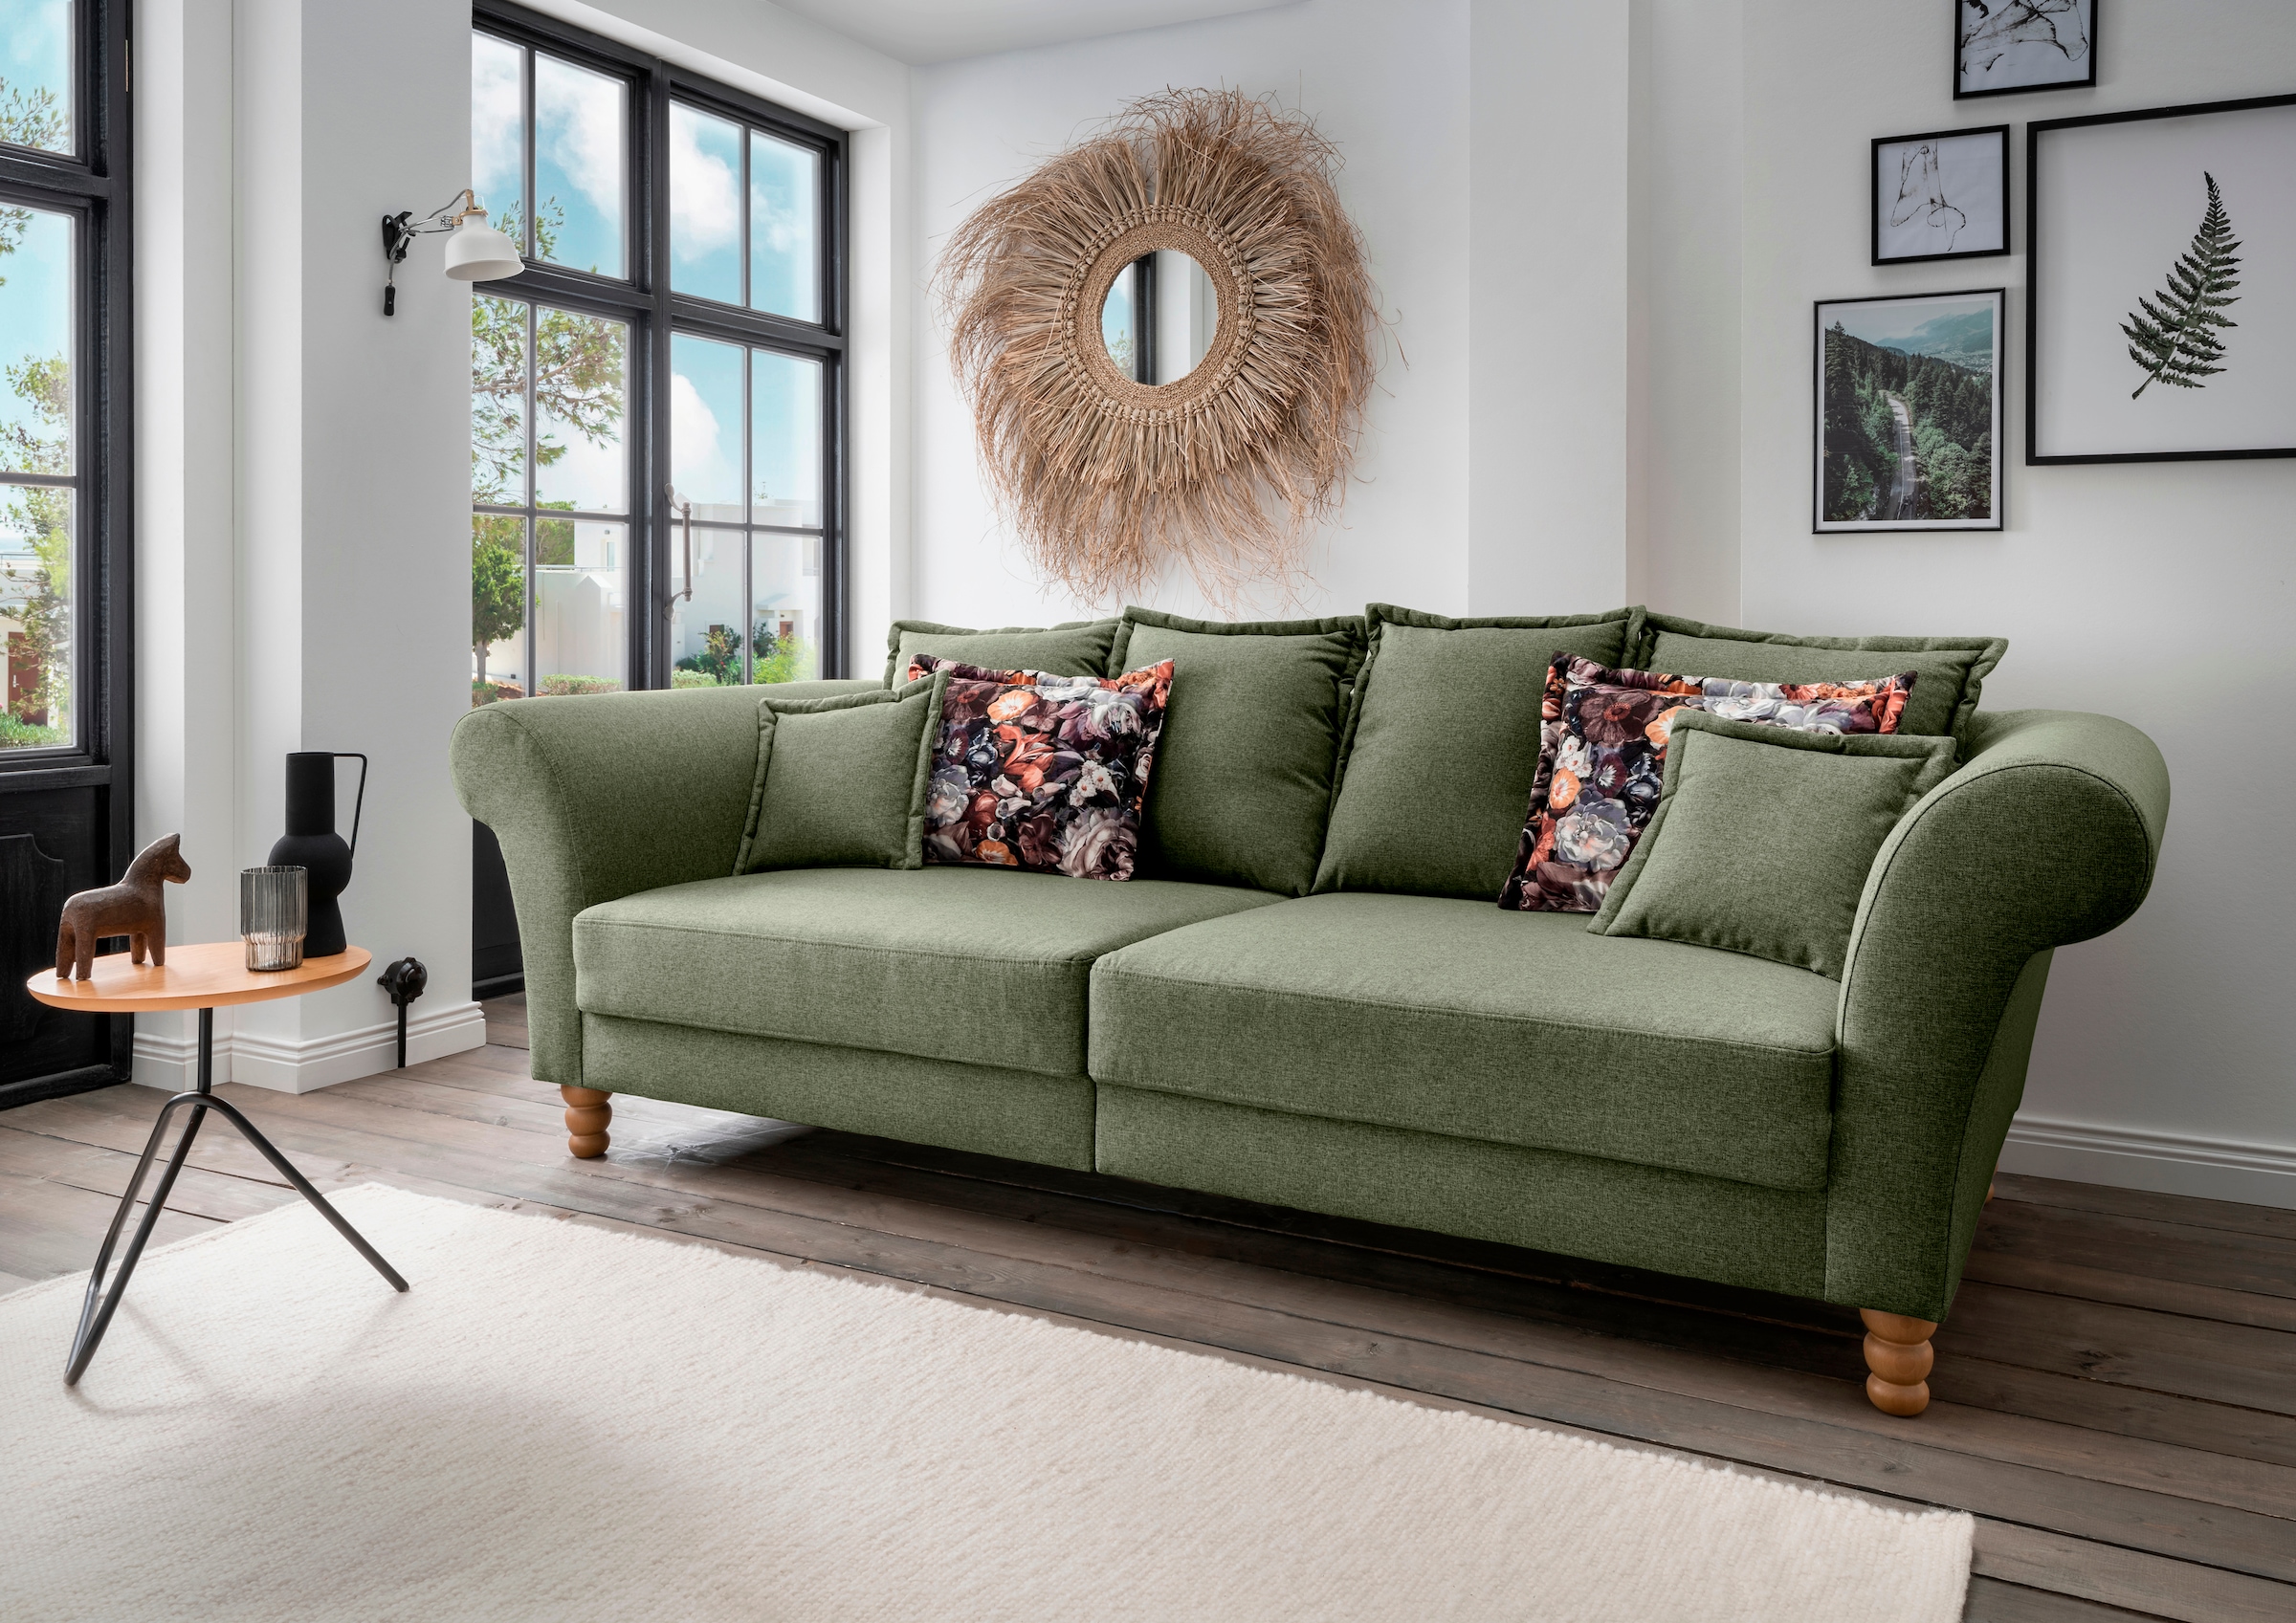 Home affaire »Tassilo« bei OTTO Big-Sofa kaufen